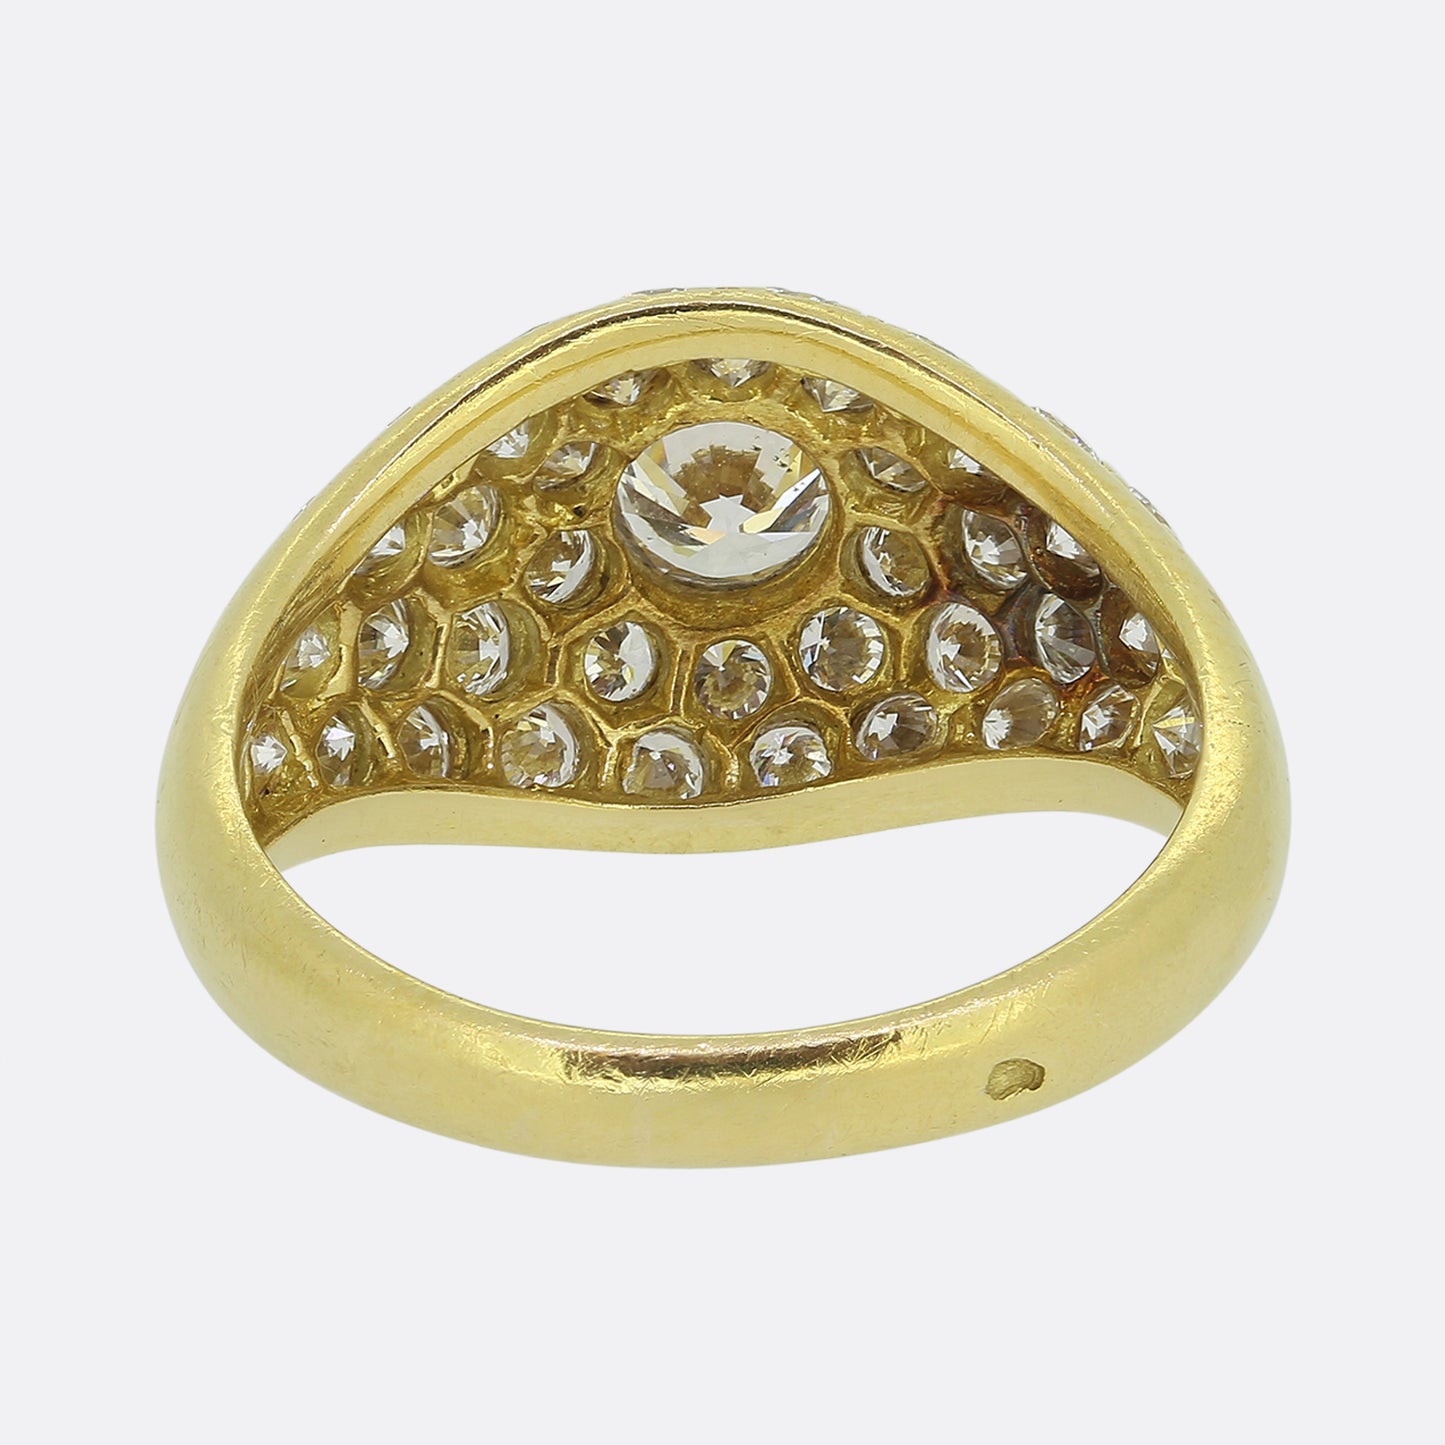 Vintage French Diamond Bombe Ring